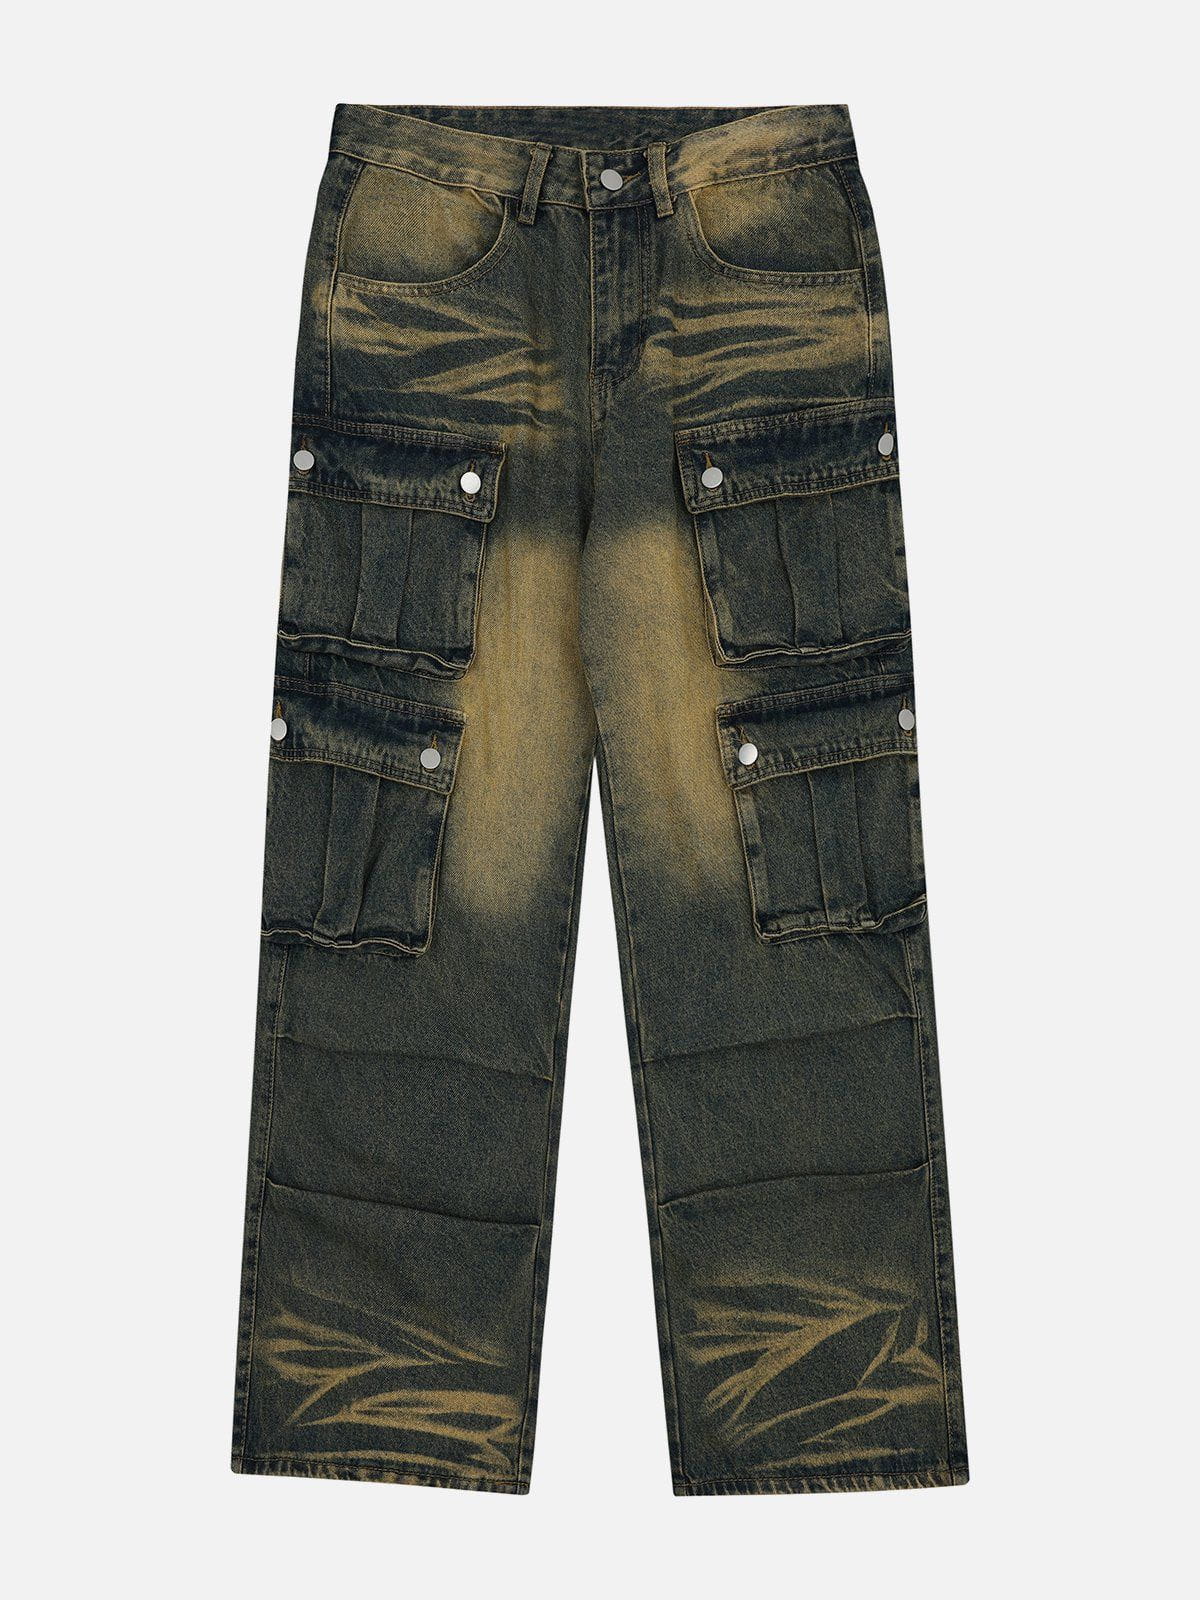 Aelfric Eden Mud Dyeing Multi Pocket Jeans – Aelfric eden